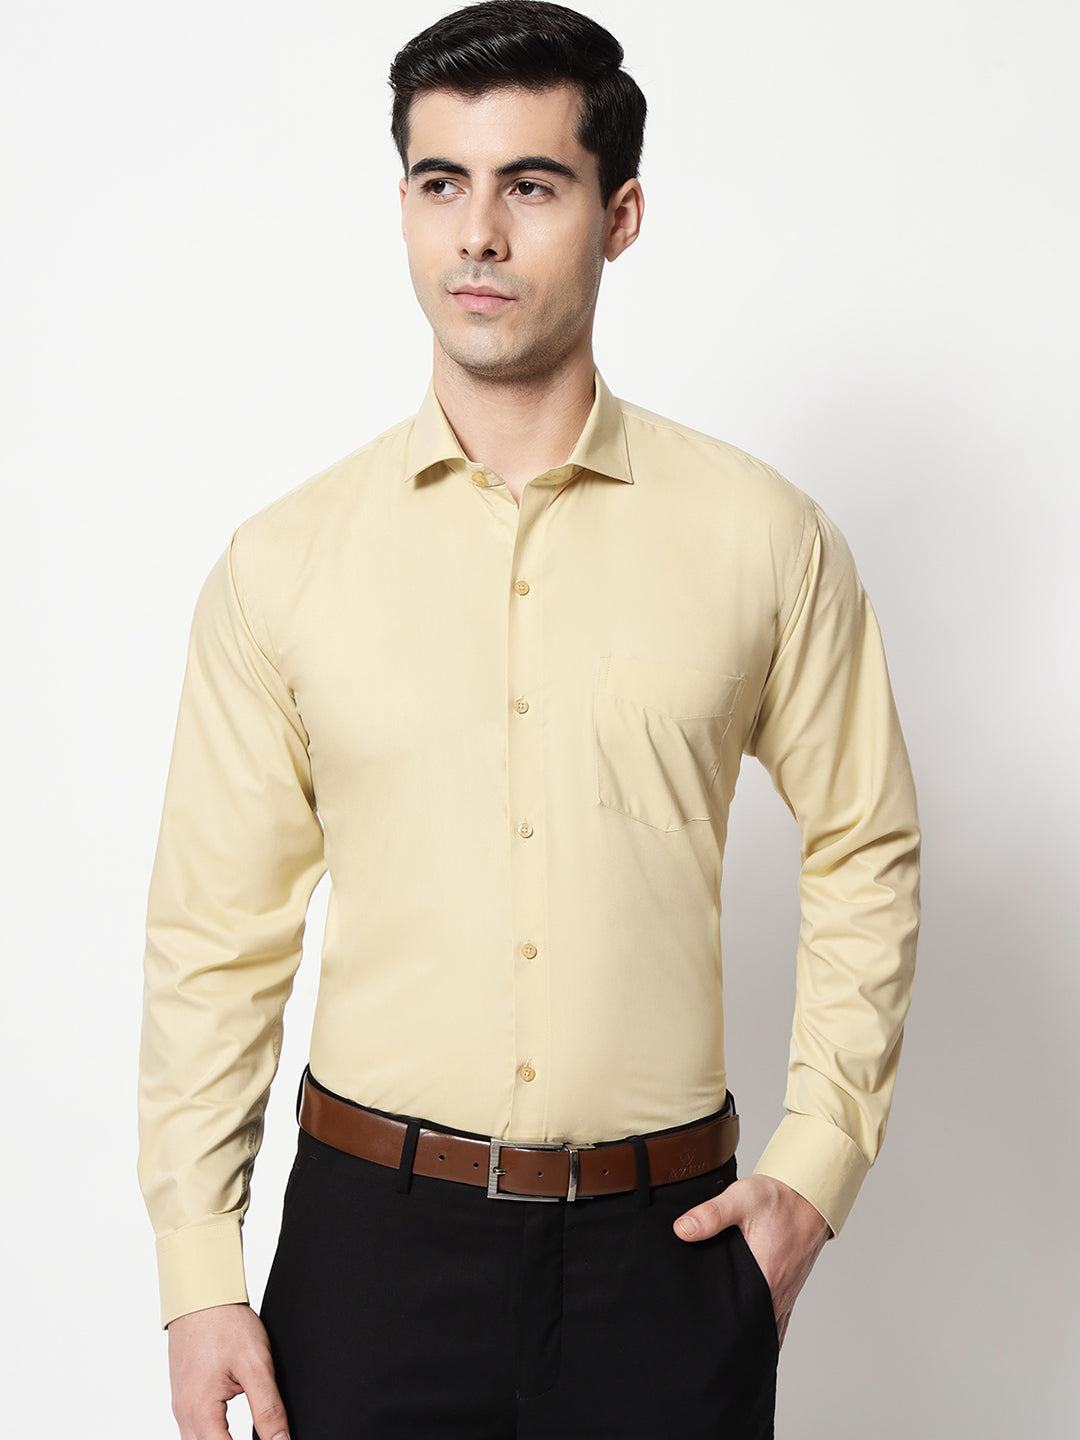 Black and White Shirts Flax Gold Plain Solid Shirt